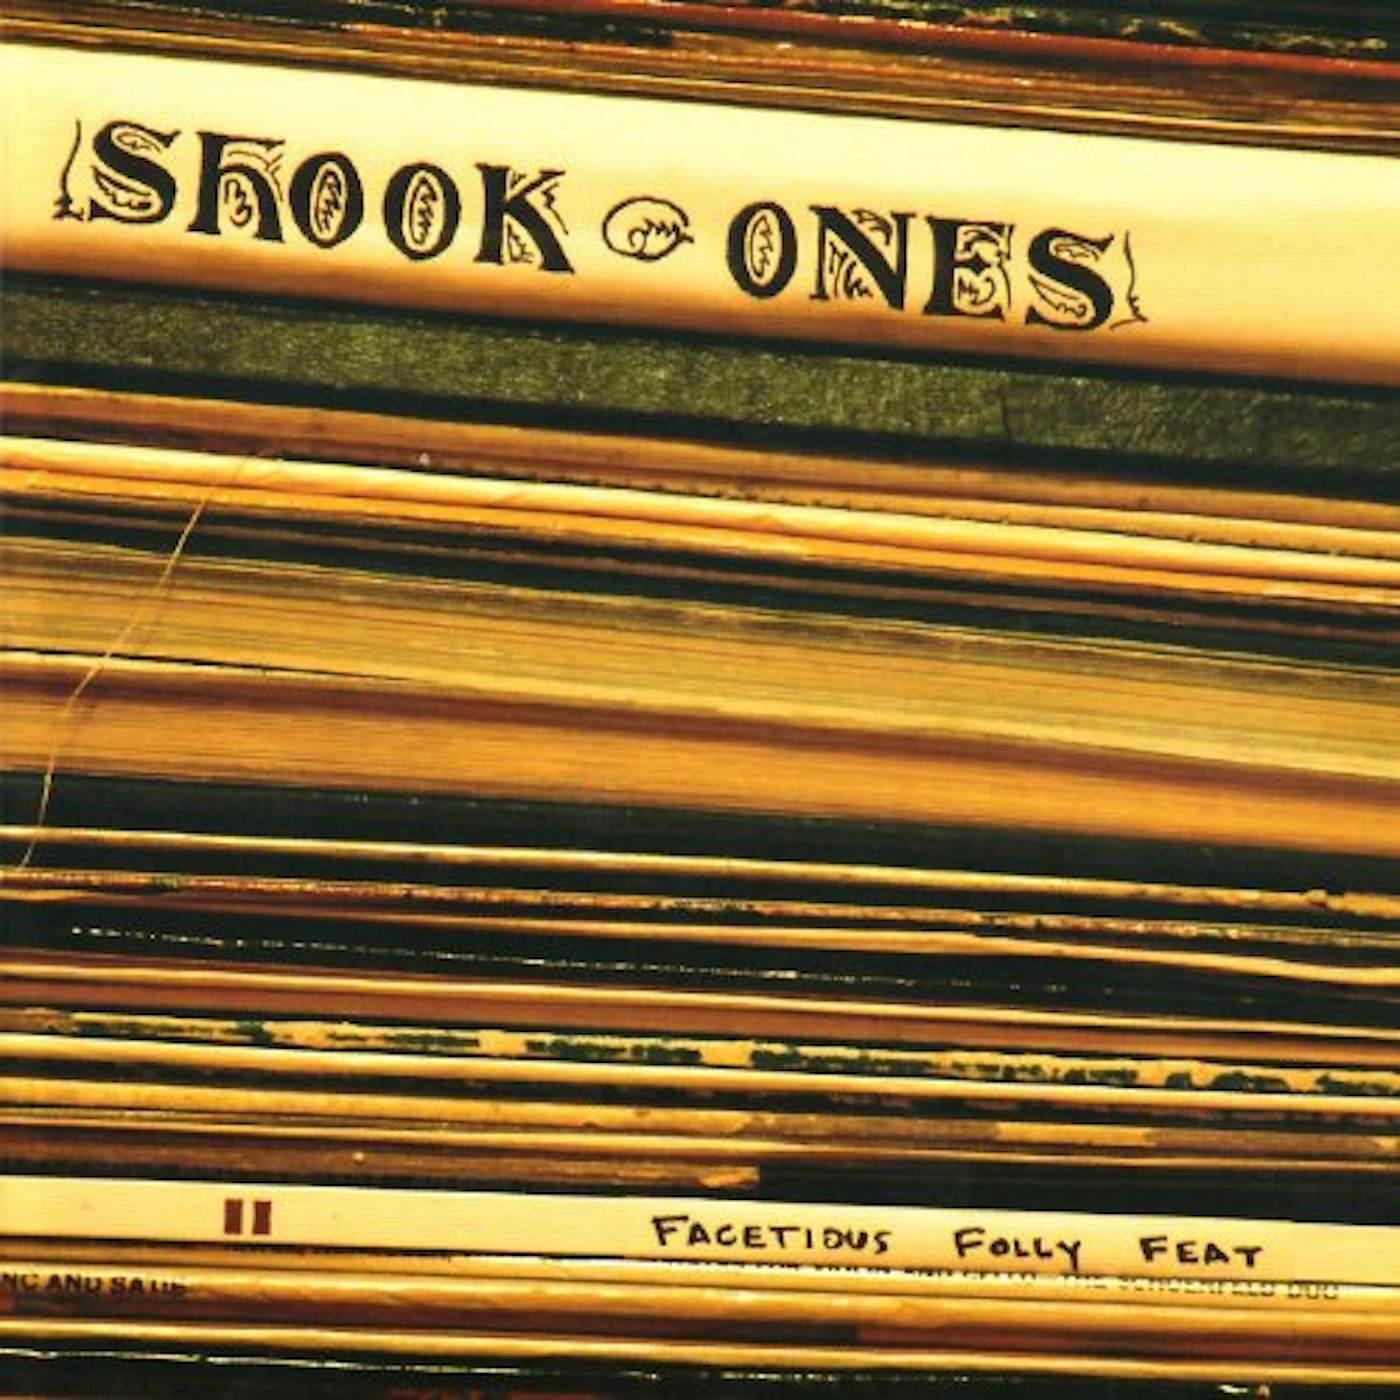 Shook Ones Facetious Folly Feat Vinyl Record